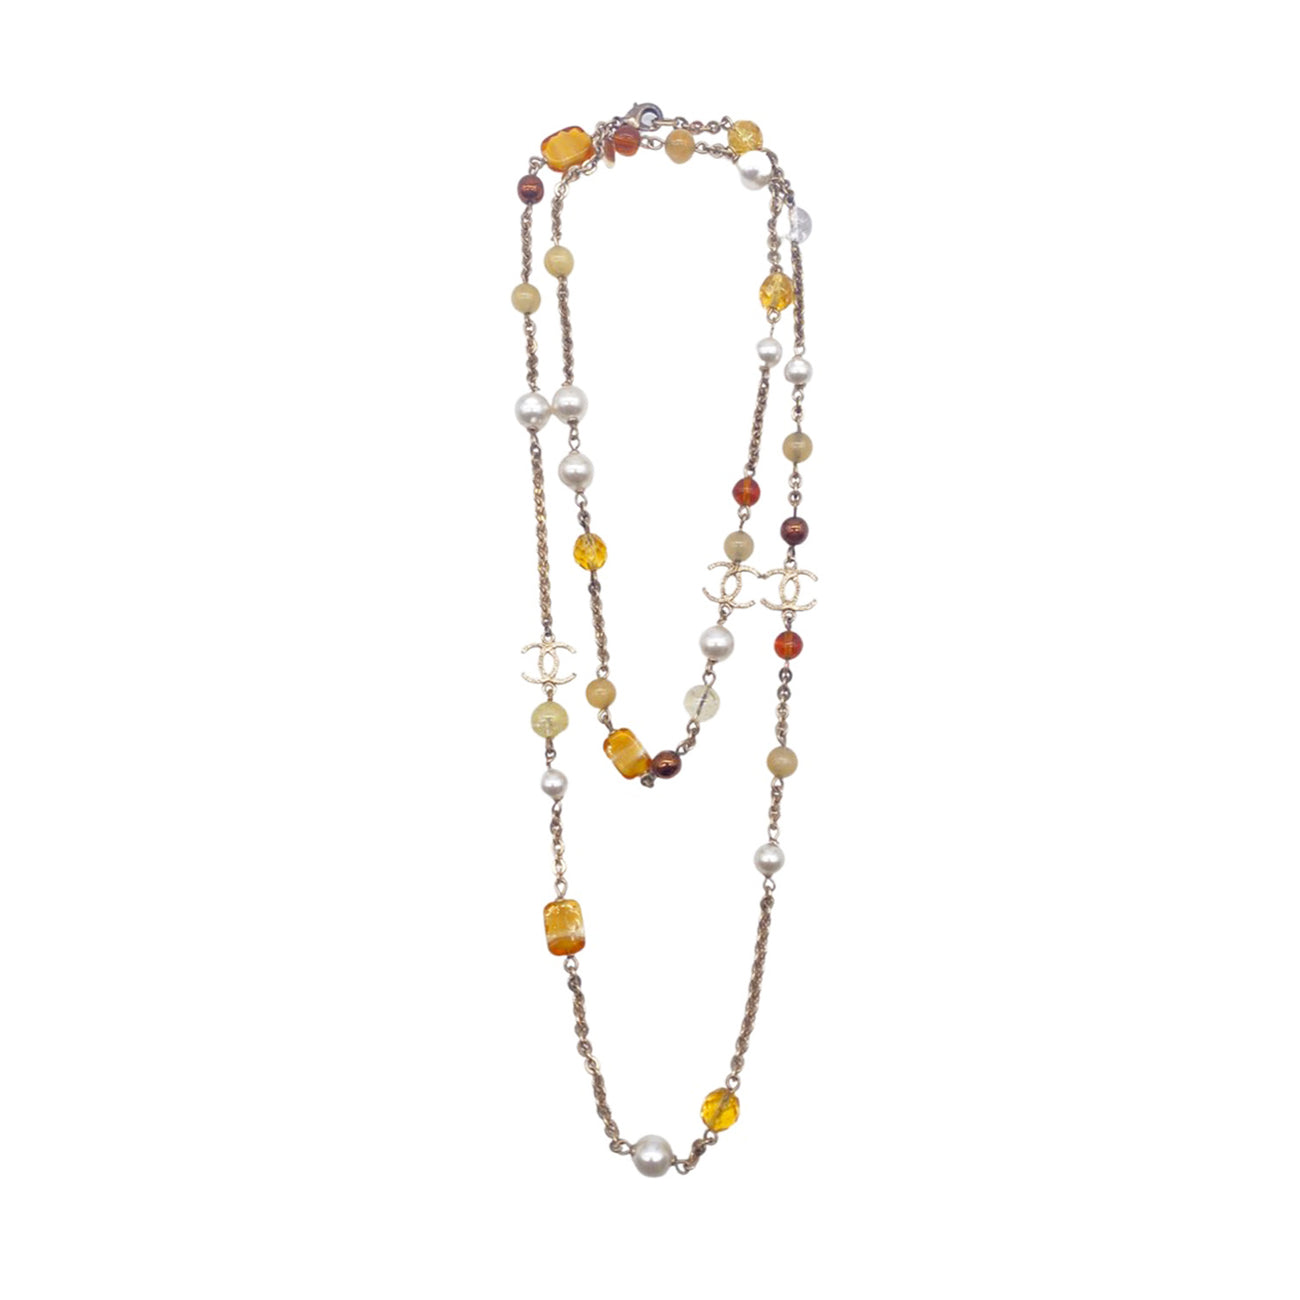 Chanel Heart Pendant Necklace - BagButler